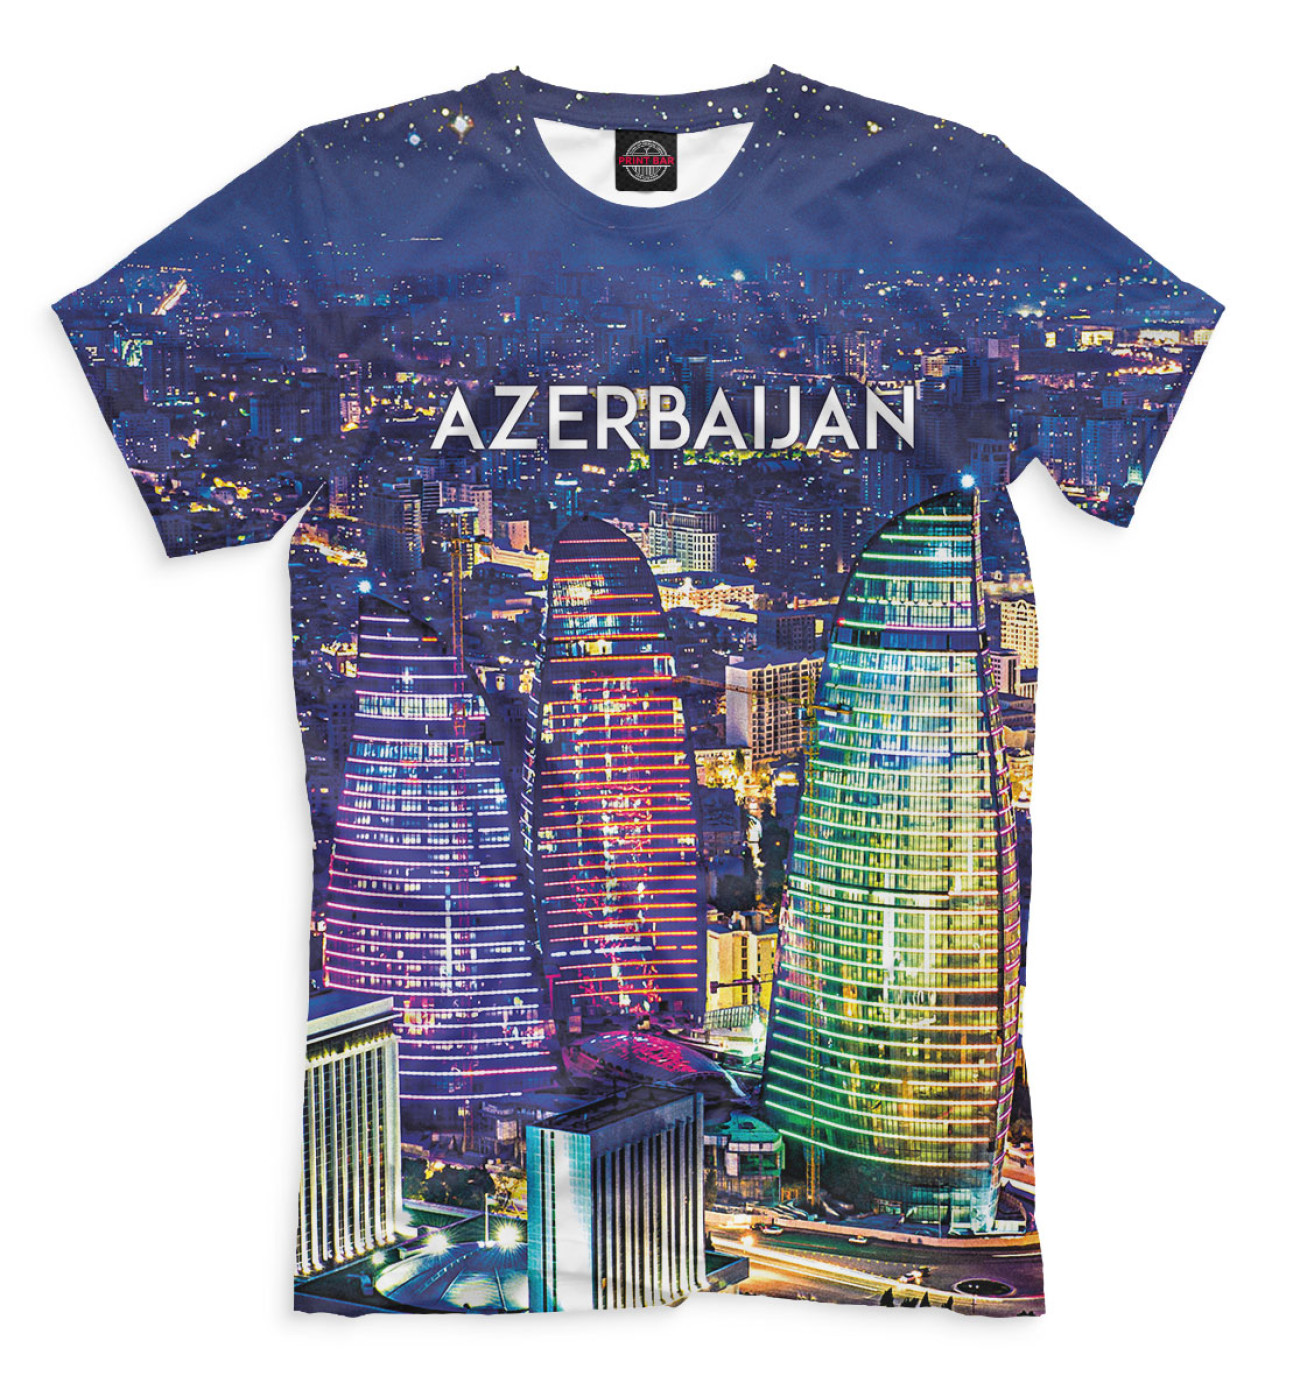 Мужская Футболка Азербайджан, артикул: AZR-712789-fut-2